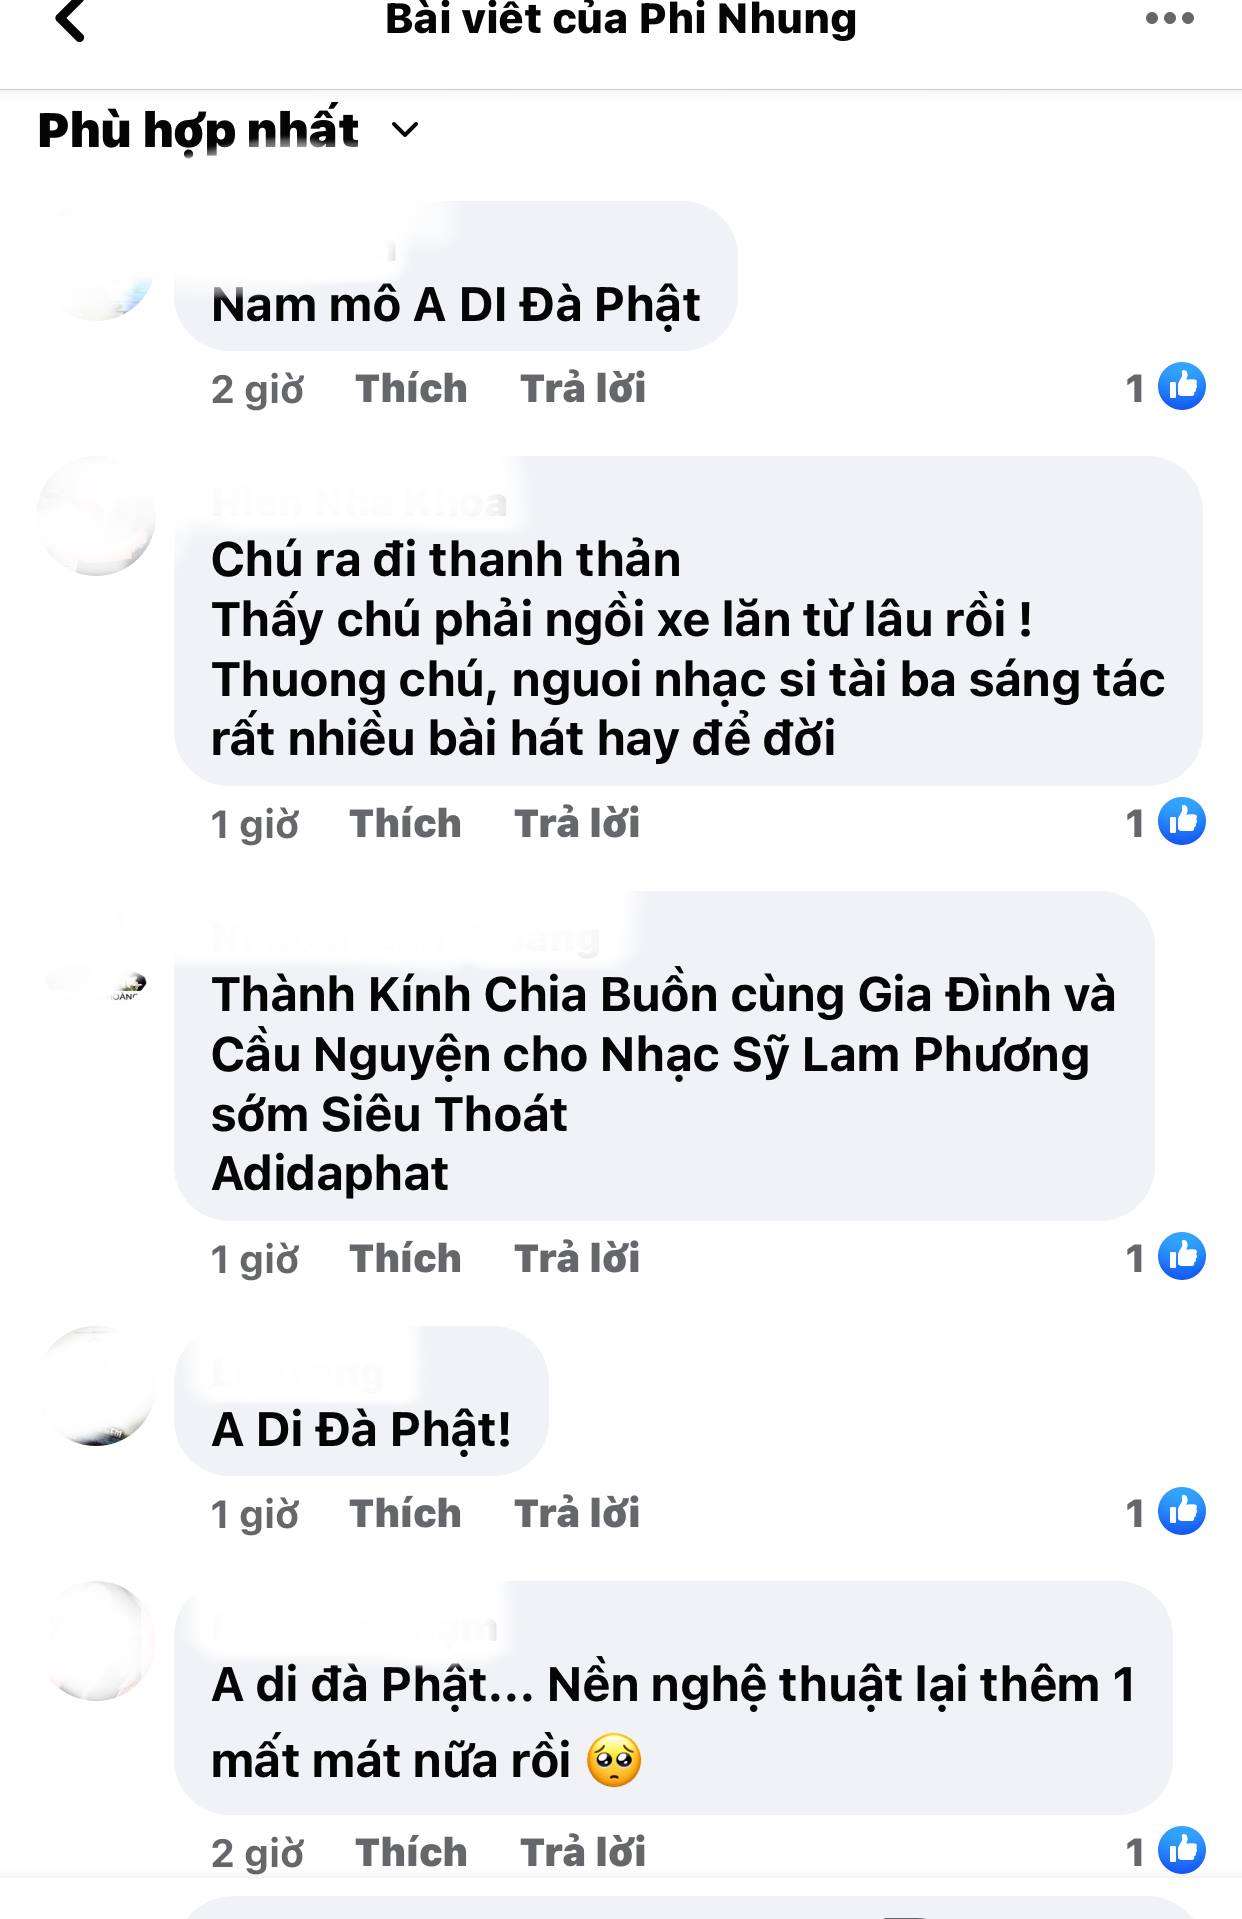 Phi-nhung-nhac-si-lam-phuong2